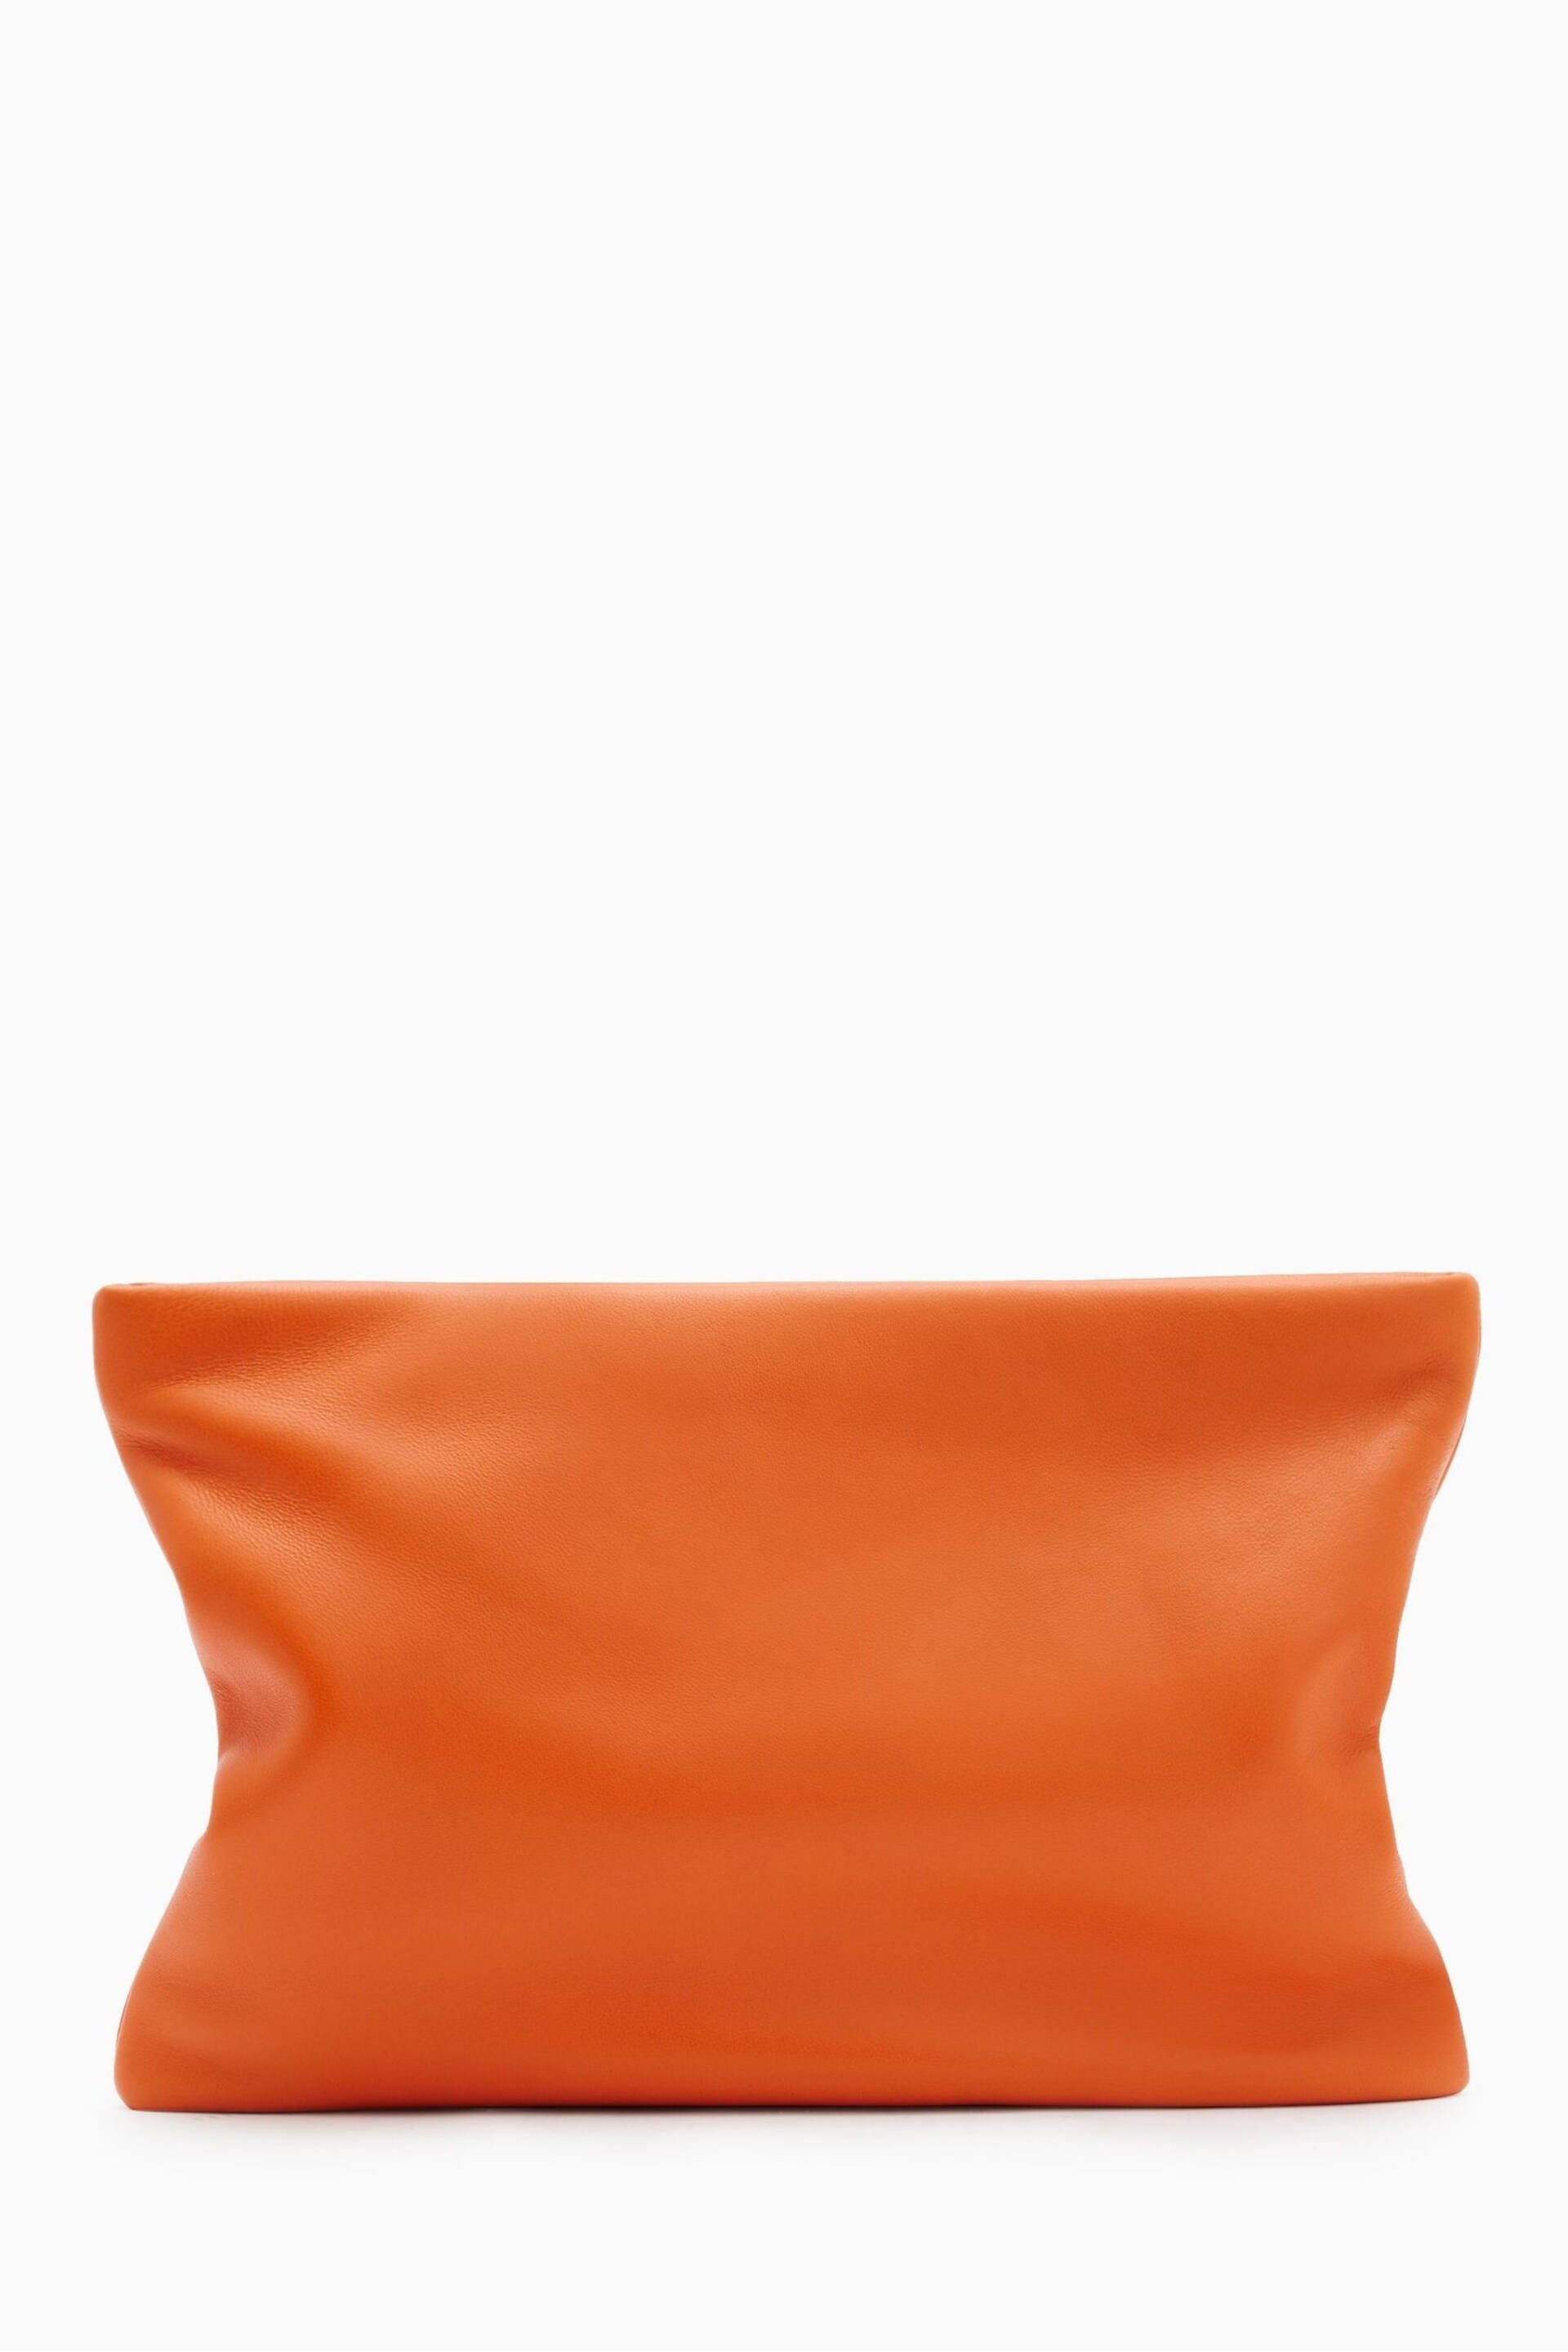 AllSaints Orange Bettina Clutch - Image 1 of 6